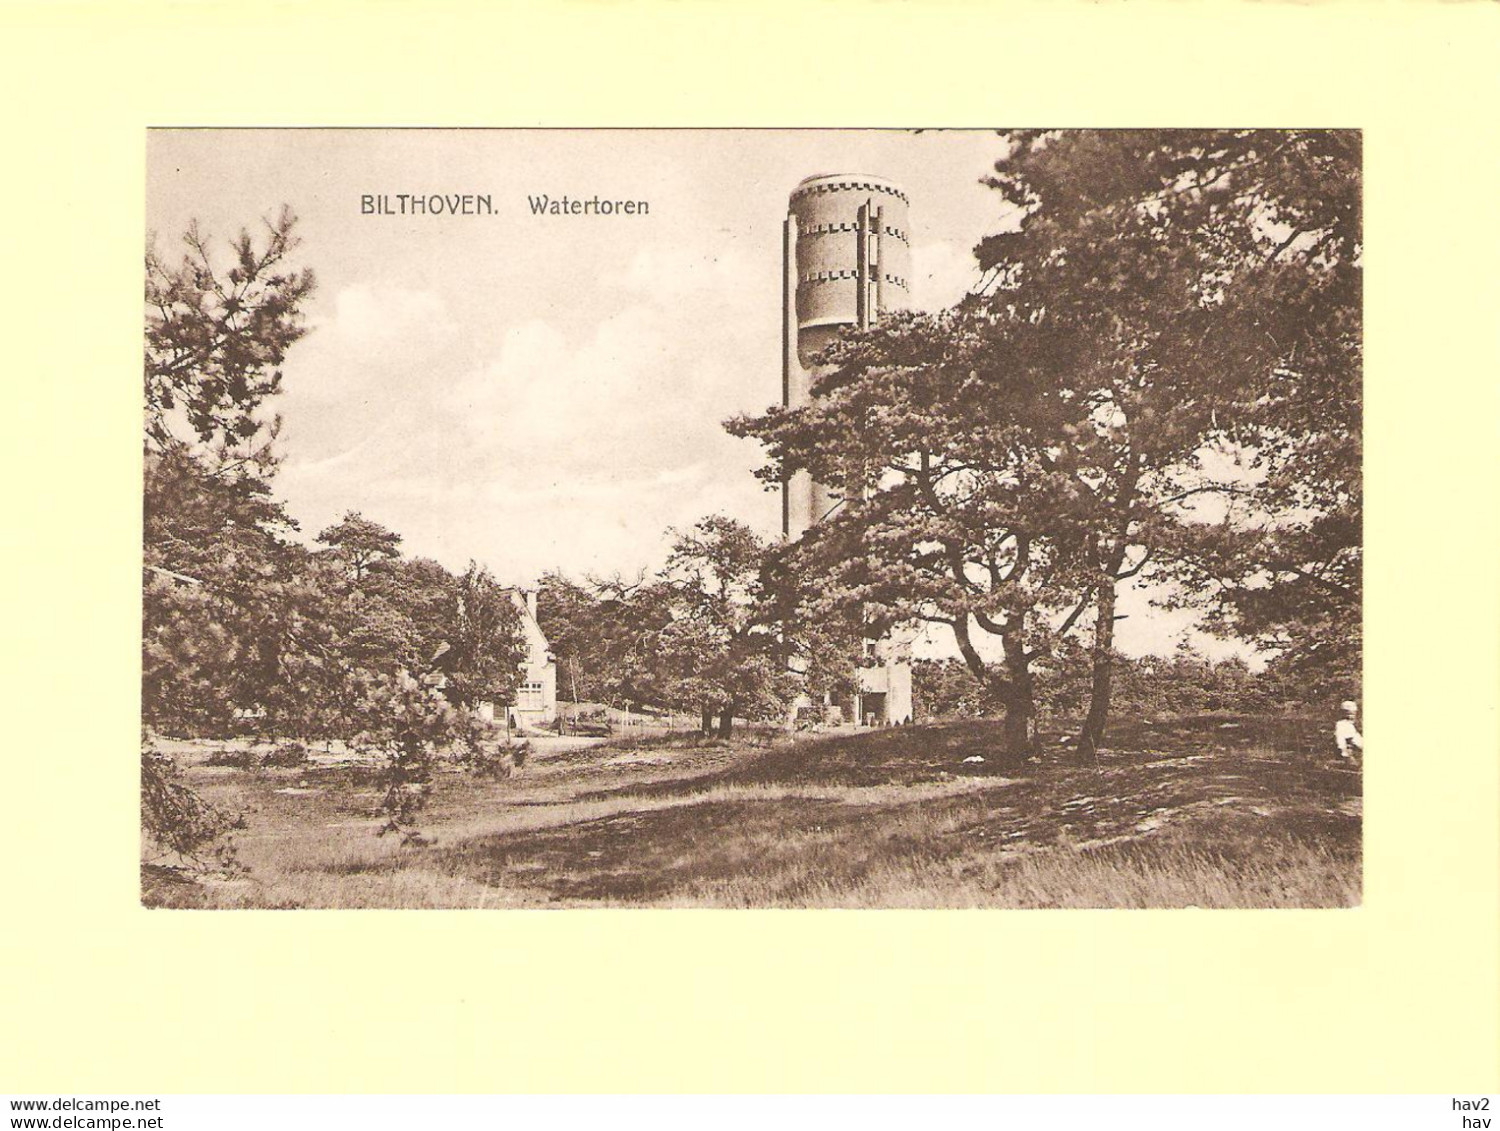 Bilthoven Watertoren 1930 RY37368 - Bilthoven